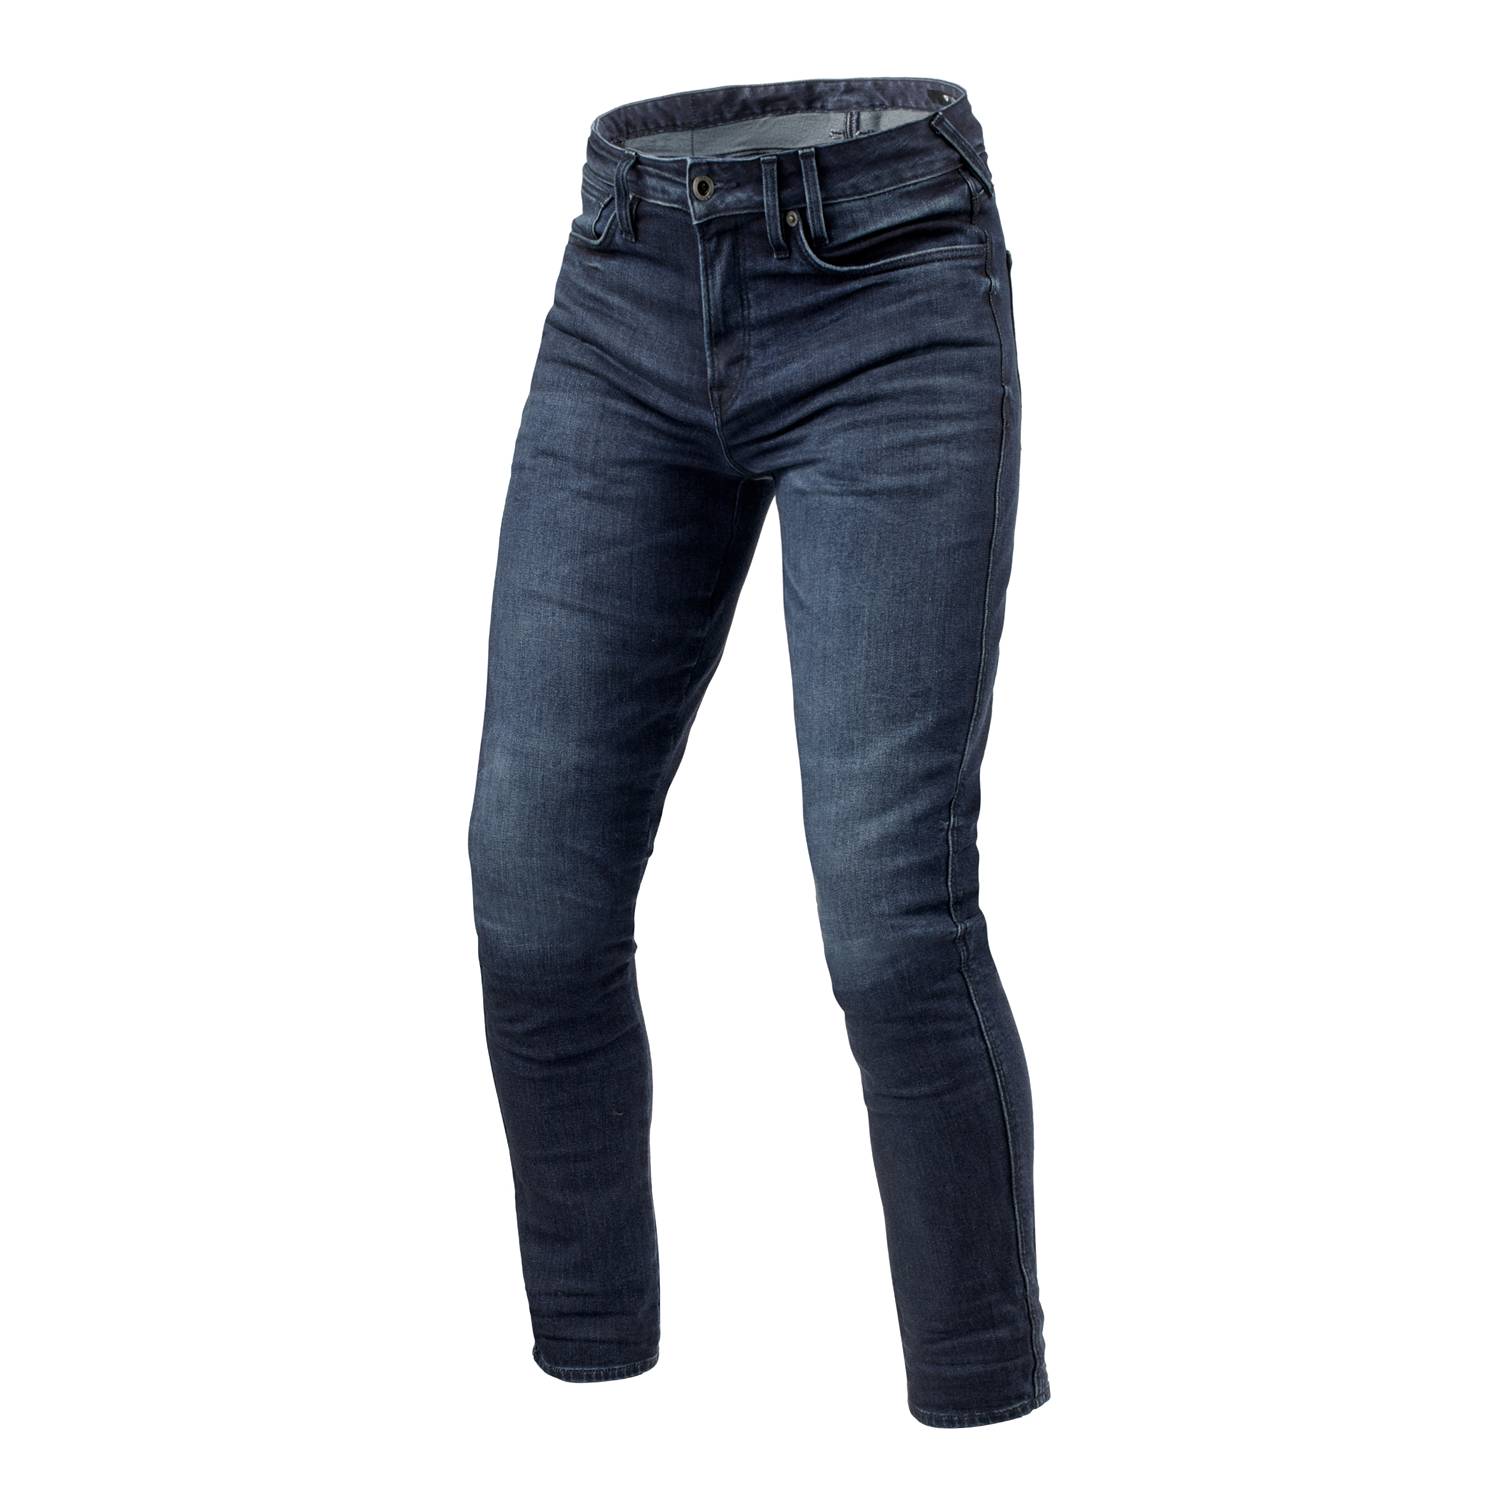 Image of REV'IT! Jeans Carlin SK Dark Blue Used L36 Motorcycle Jeans Größe L36/W36